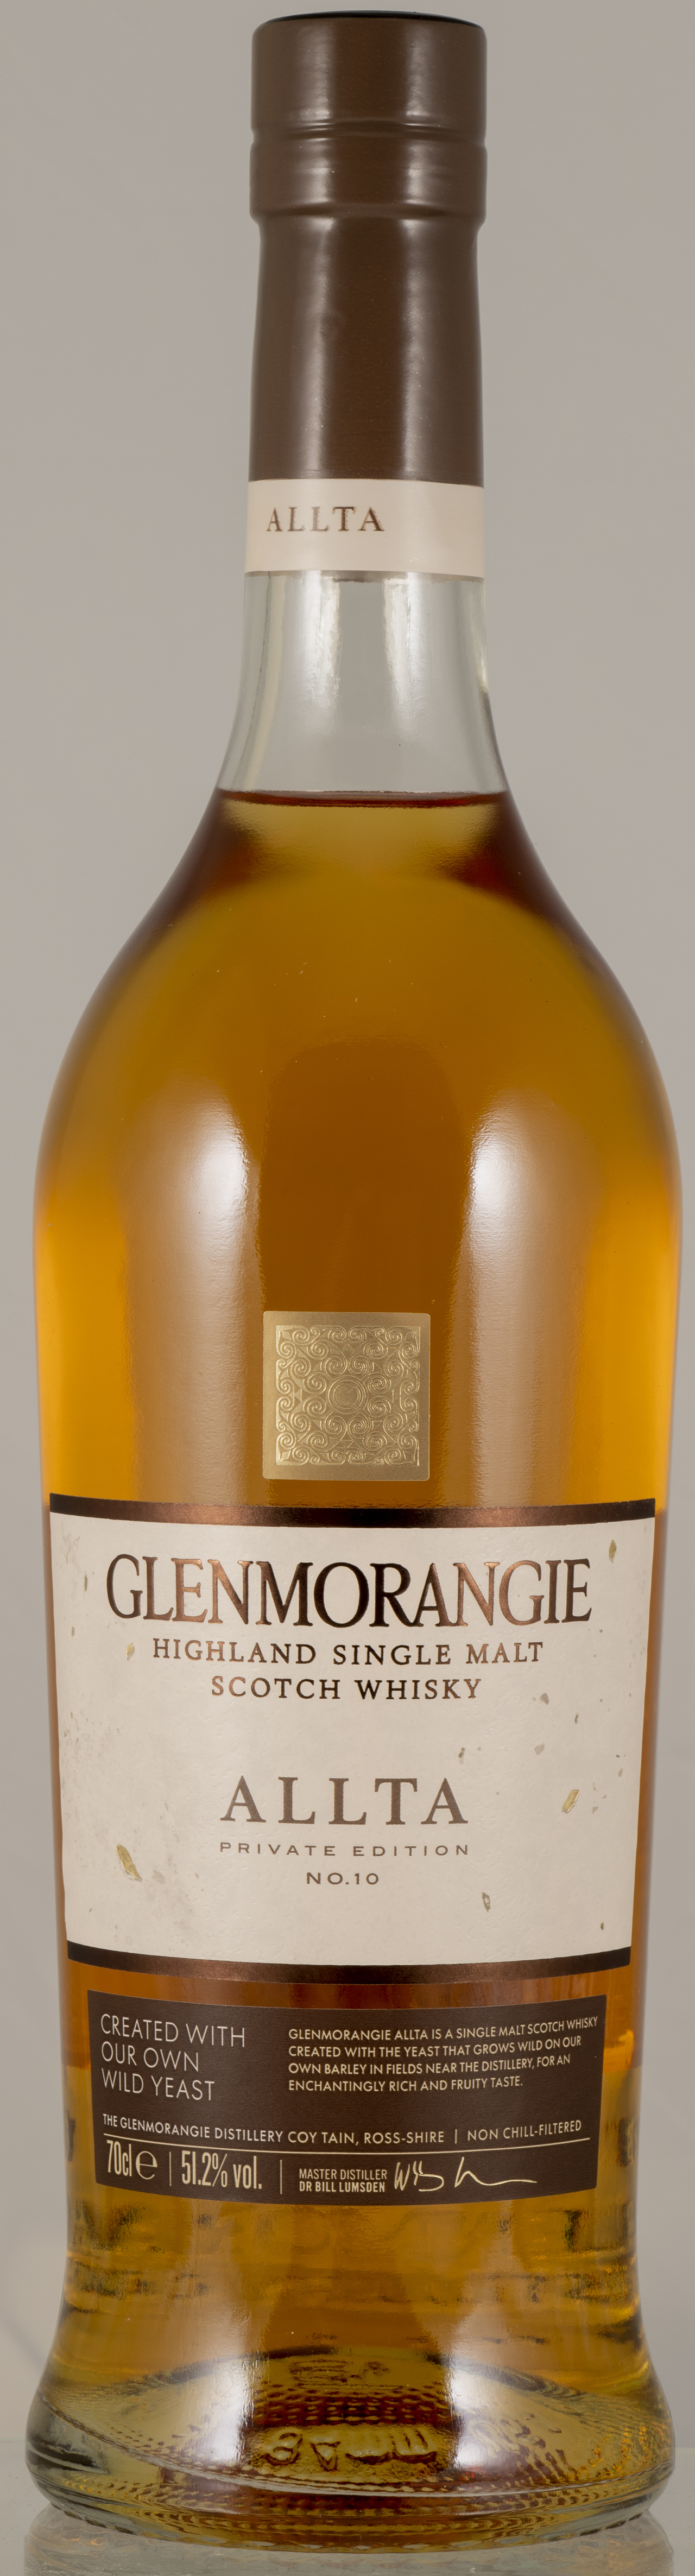 Billede: PHC_7078 - Glenmorangie Allta Private Edition No 10 - bottle front.jpg